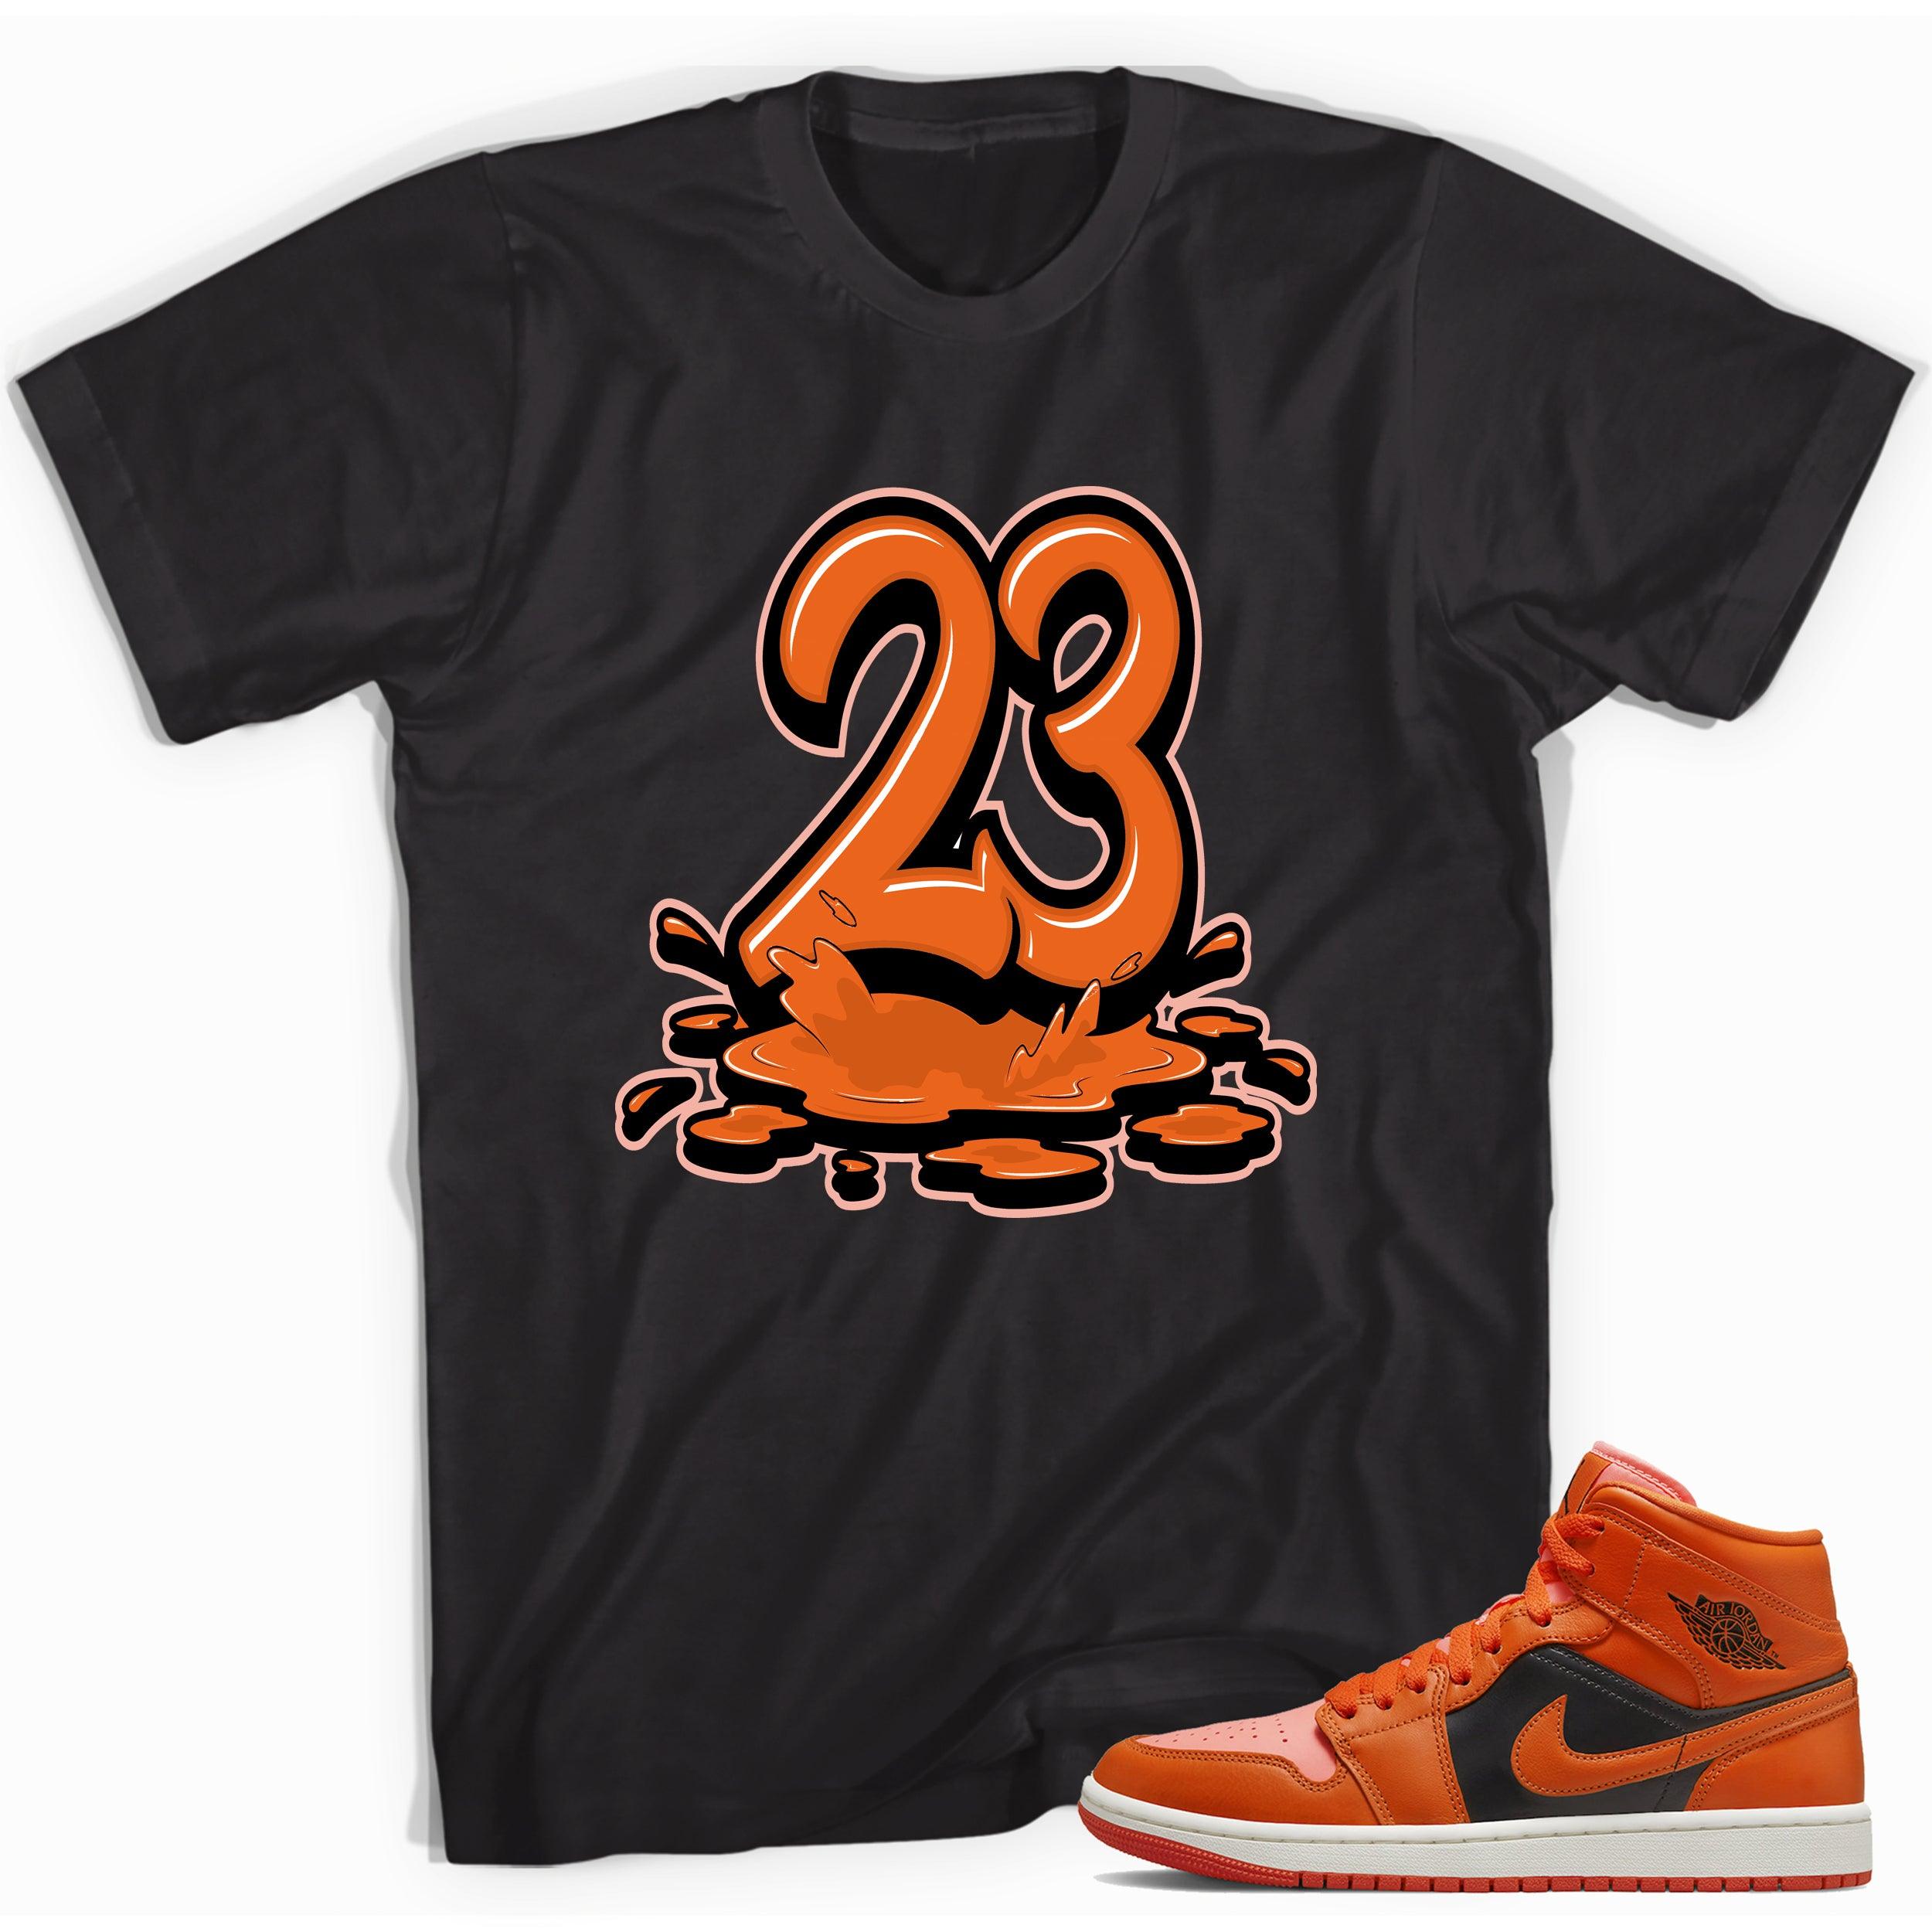 23 Melting Sneaker Tee AJ 1 Mid Orange Black photo